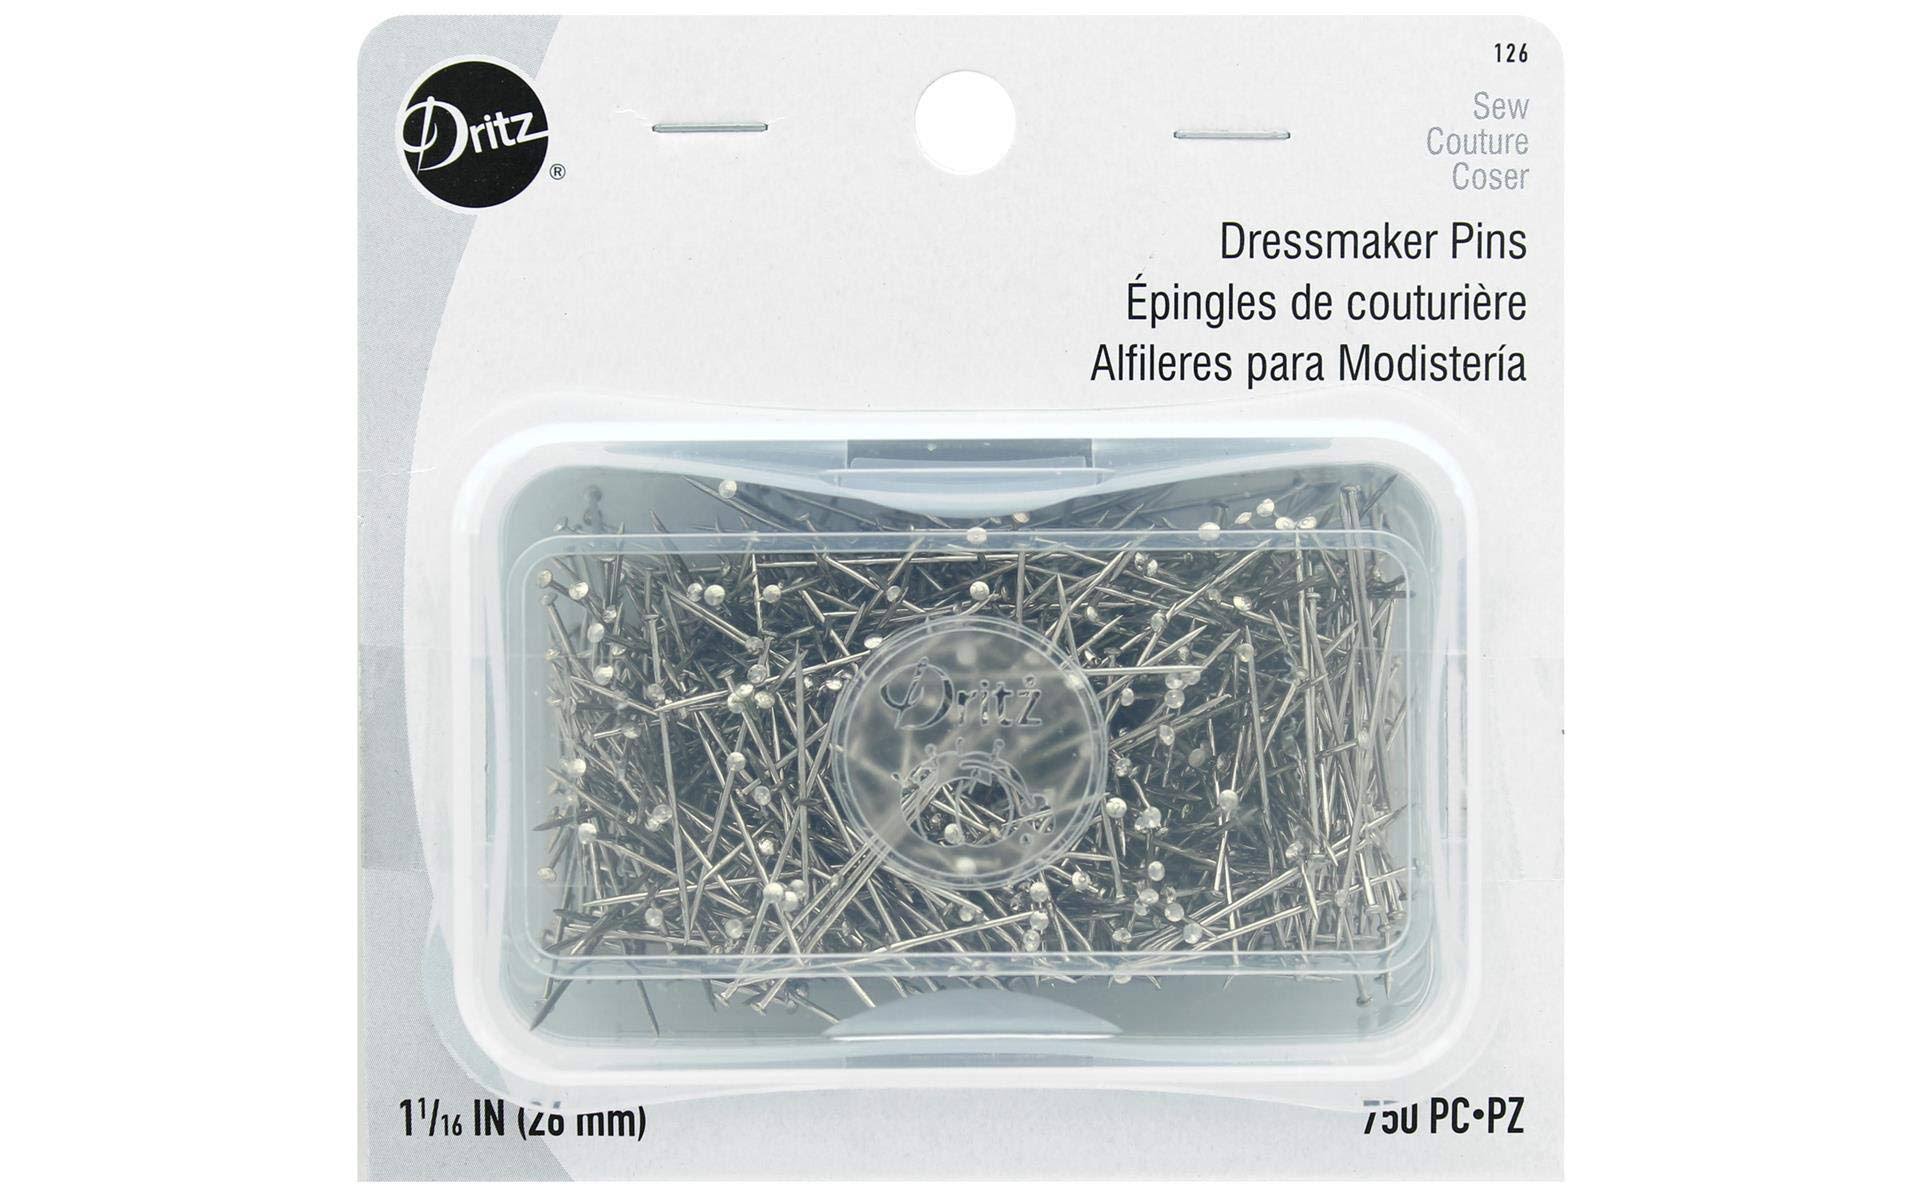 Dritz Dressmaker Pins - Size 17, 750pk